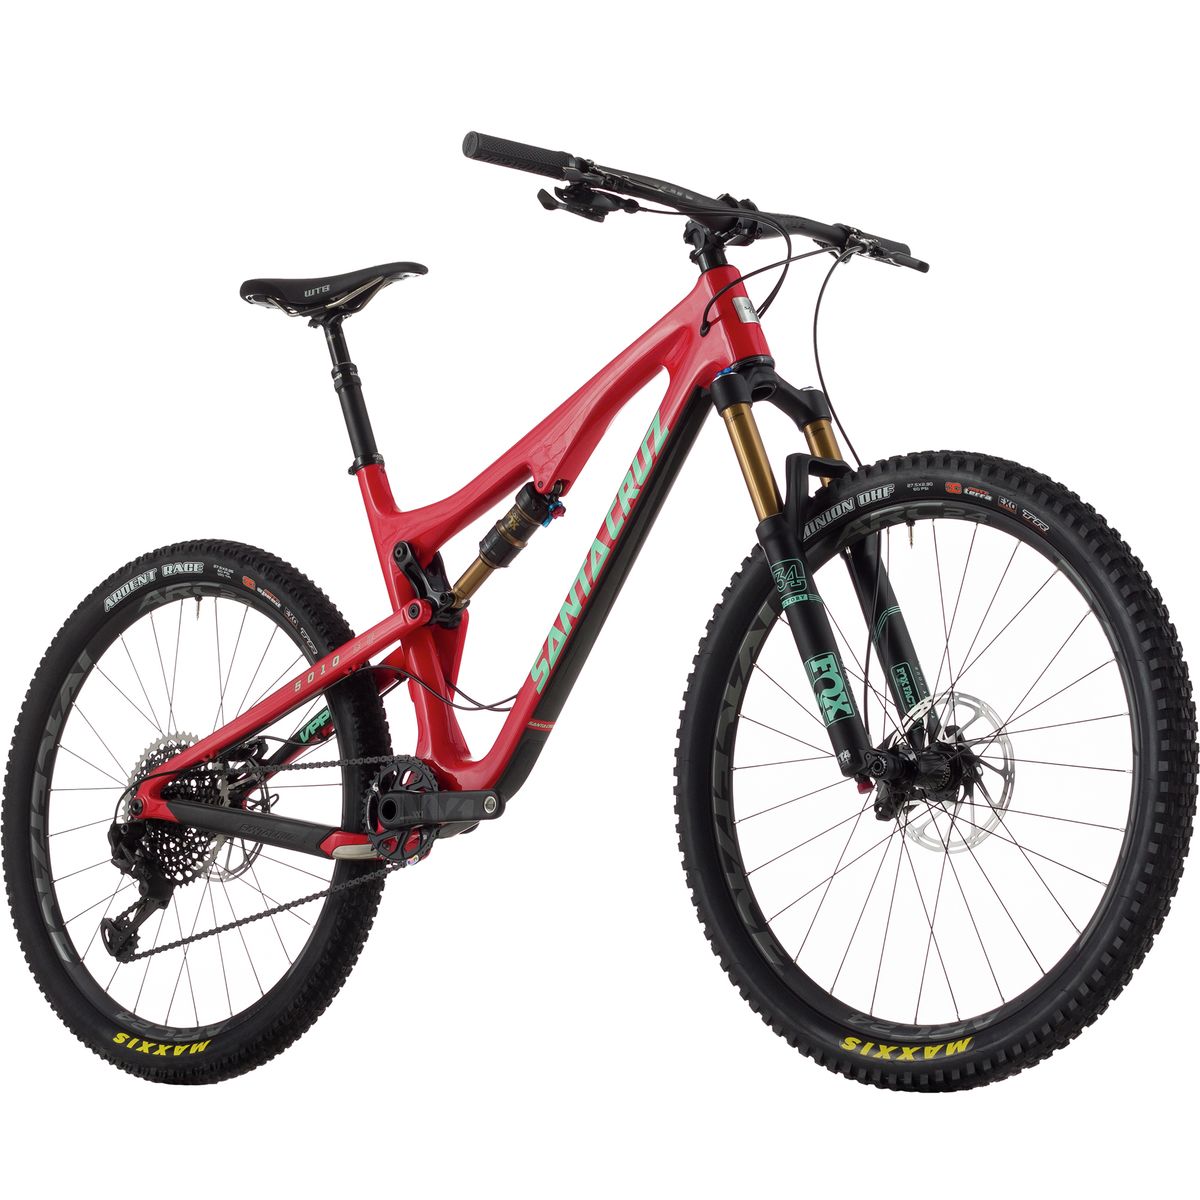 Santa Cruz Bicycles 5010 2.0 Carbon CC XX1 Complete Mountain Bike 2017